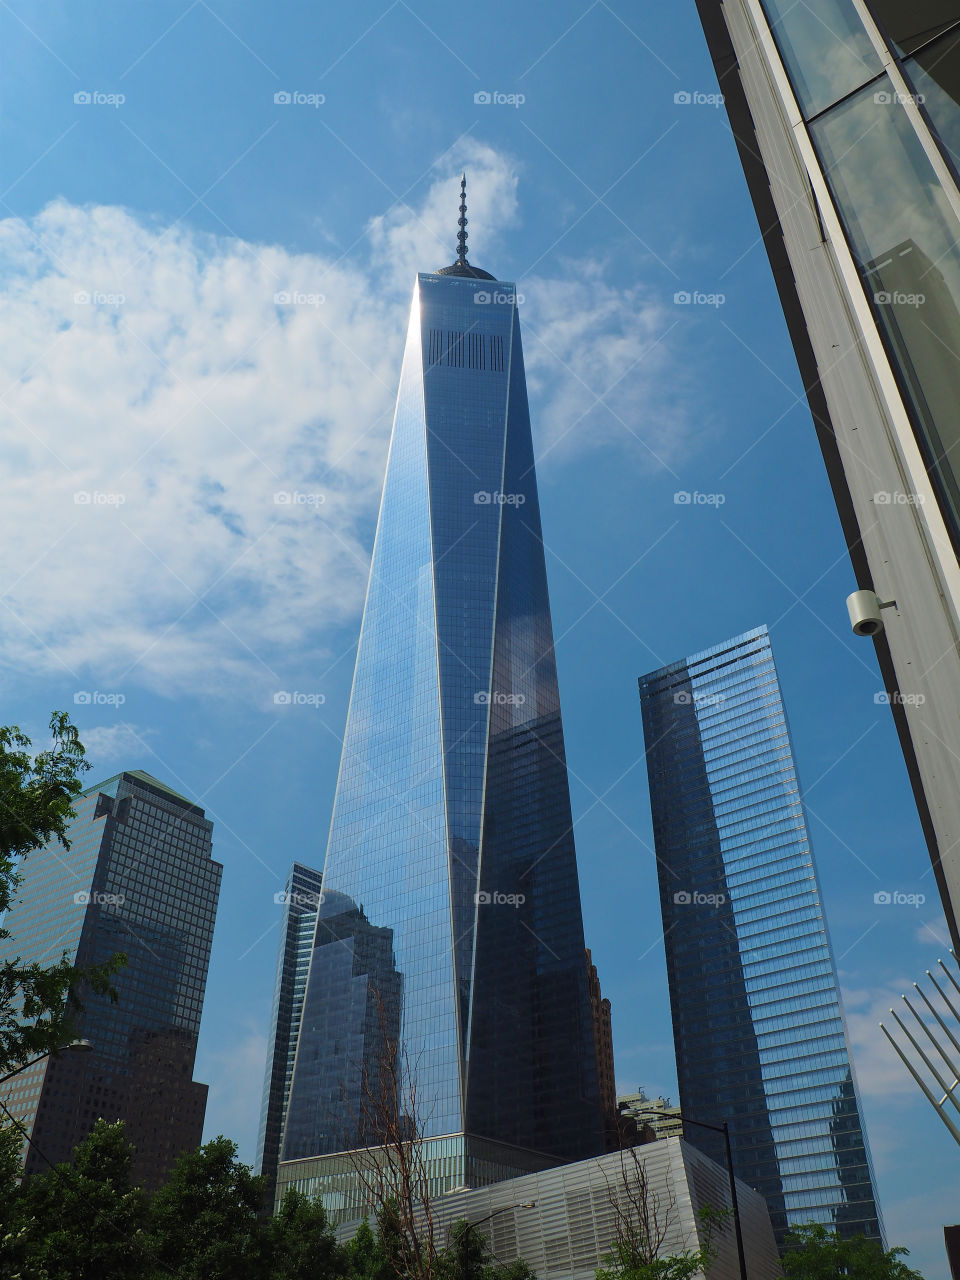 One World Tower WTC, Oculus Ground Zero, New York World Trade Center 9/11